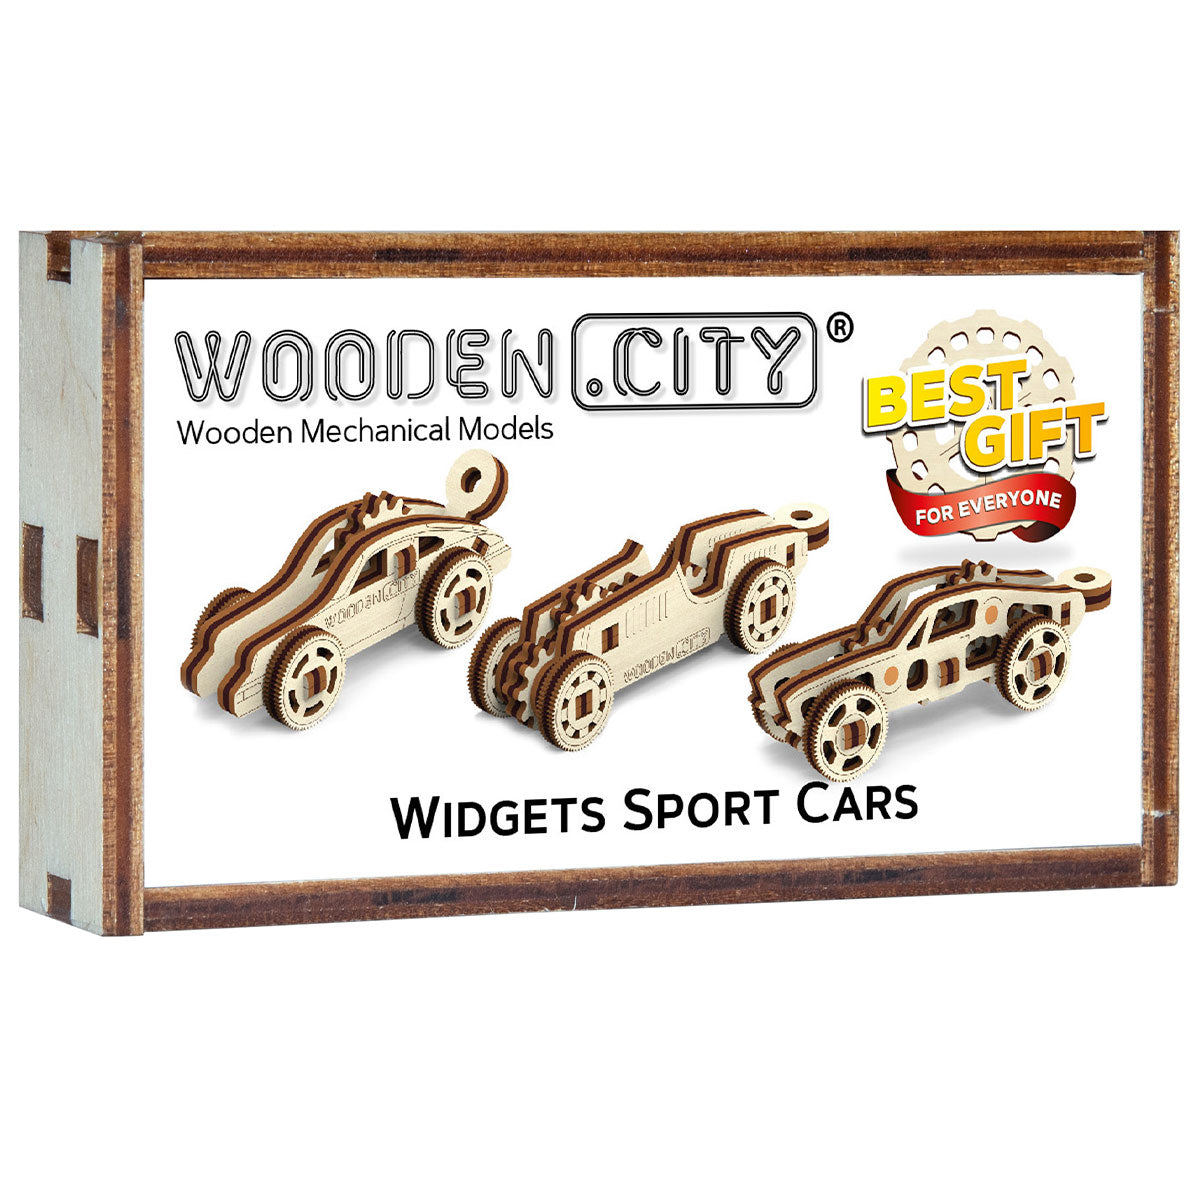 Wooden City Widgets Sport Cars